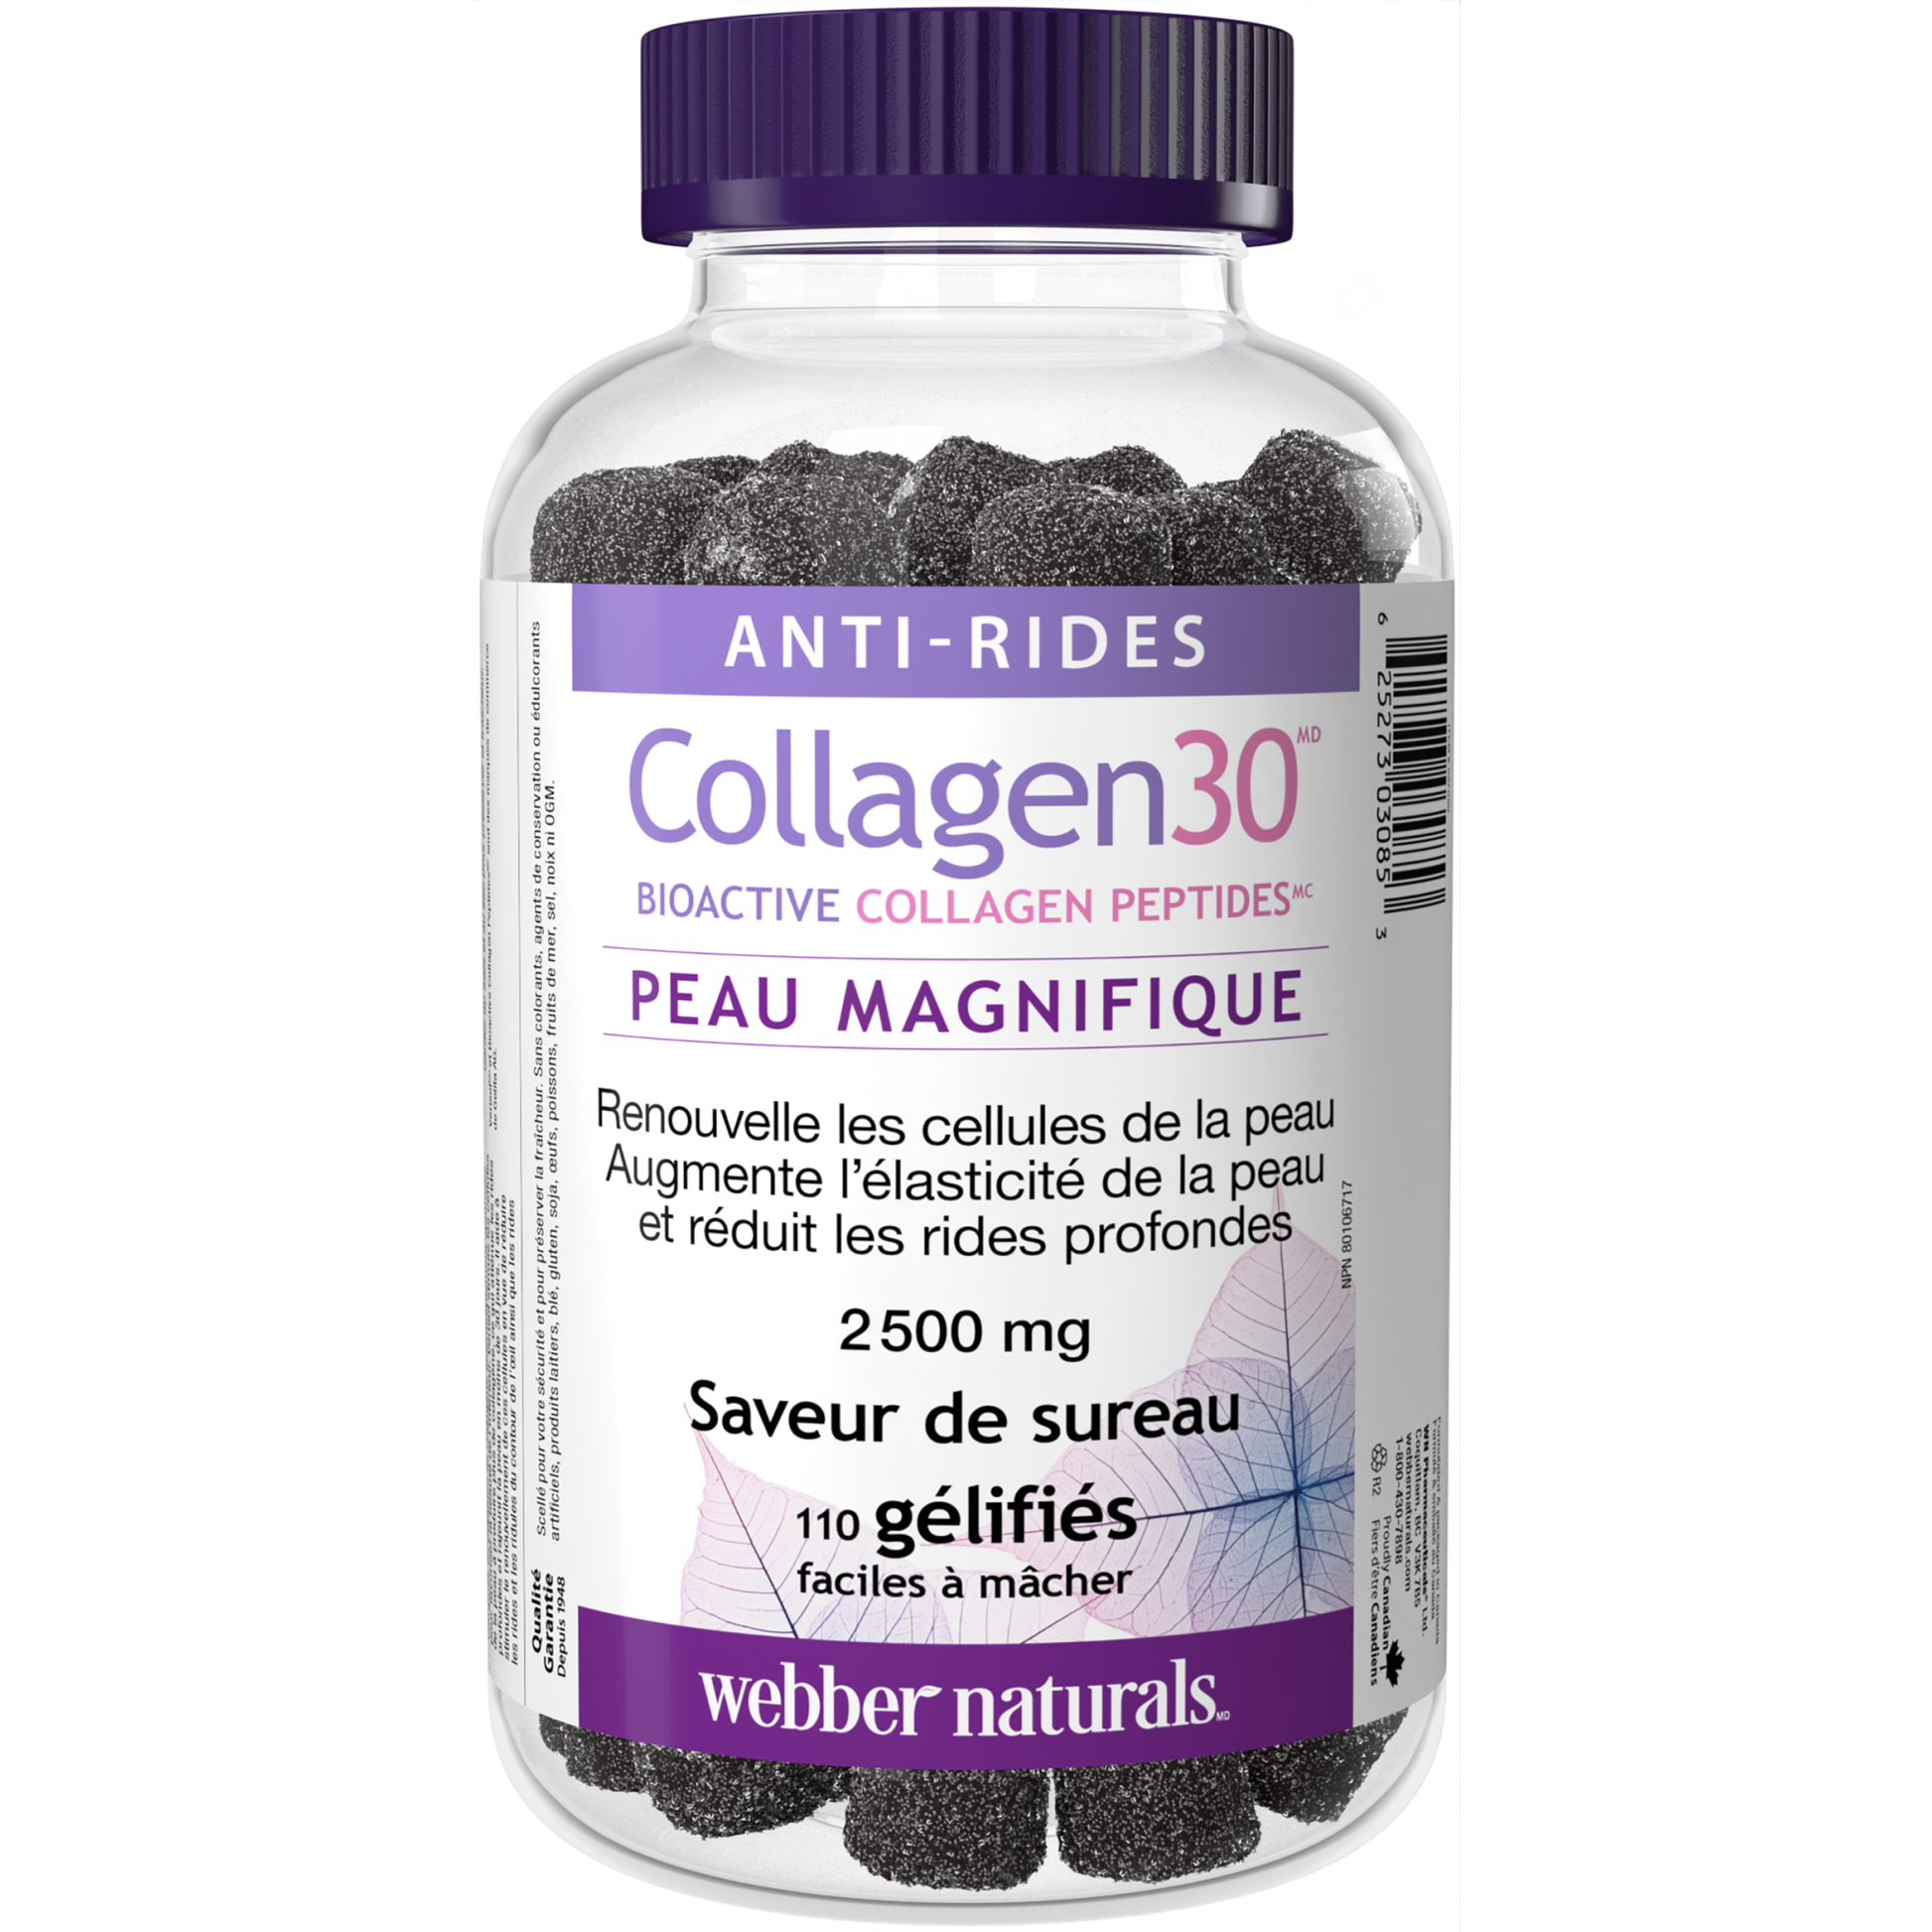 Collagen30(MD) Bioactive Collagen Peptides(MC) 2500 mg Saveur de sureau for Webber Naturals|v|hi-res|WN3085